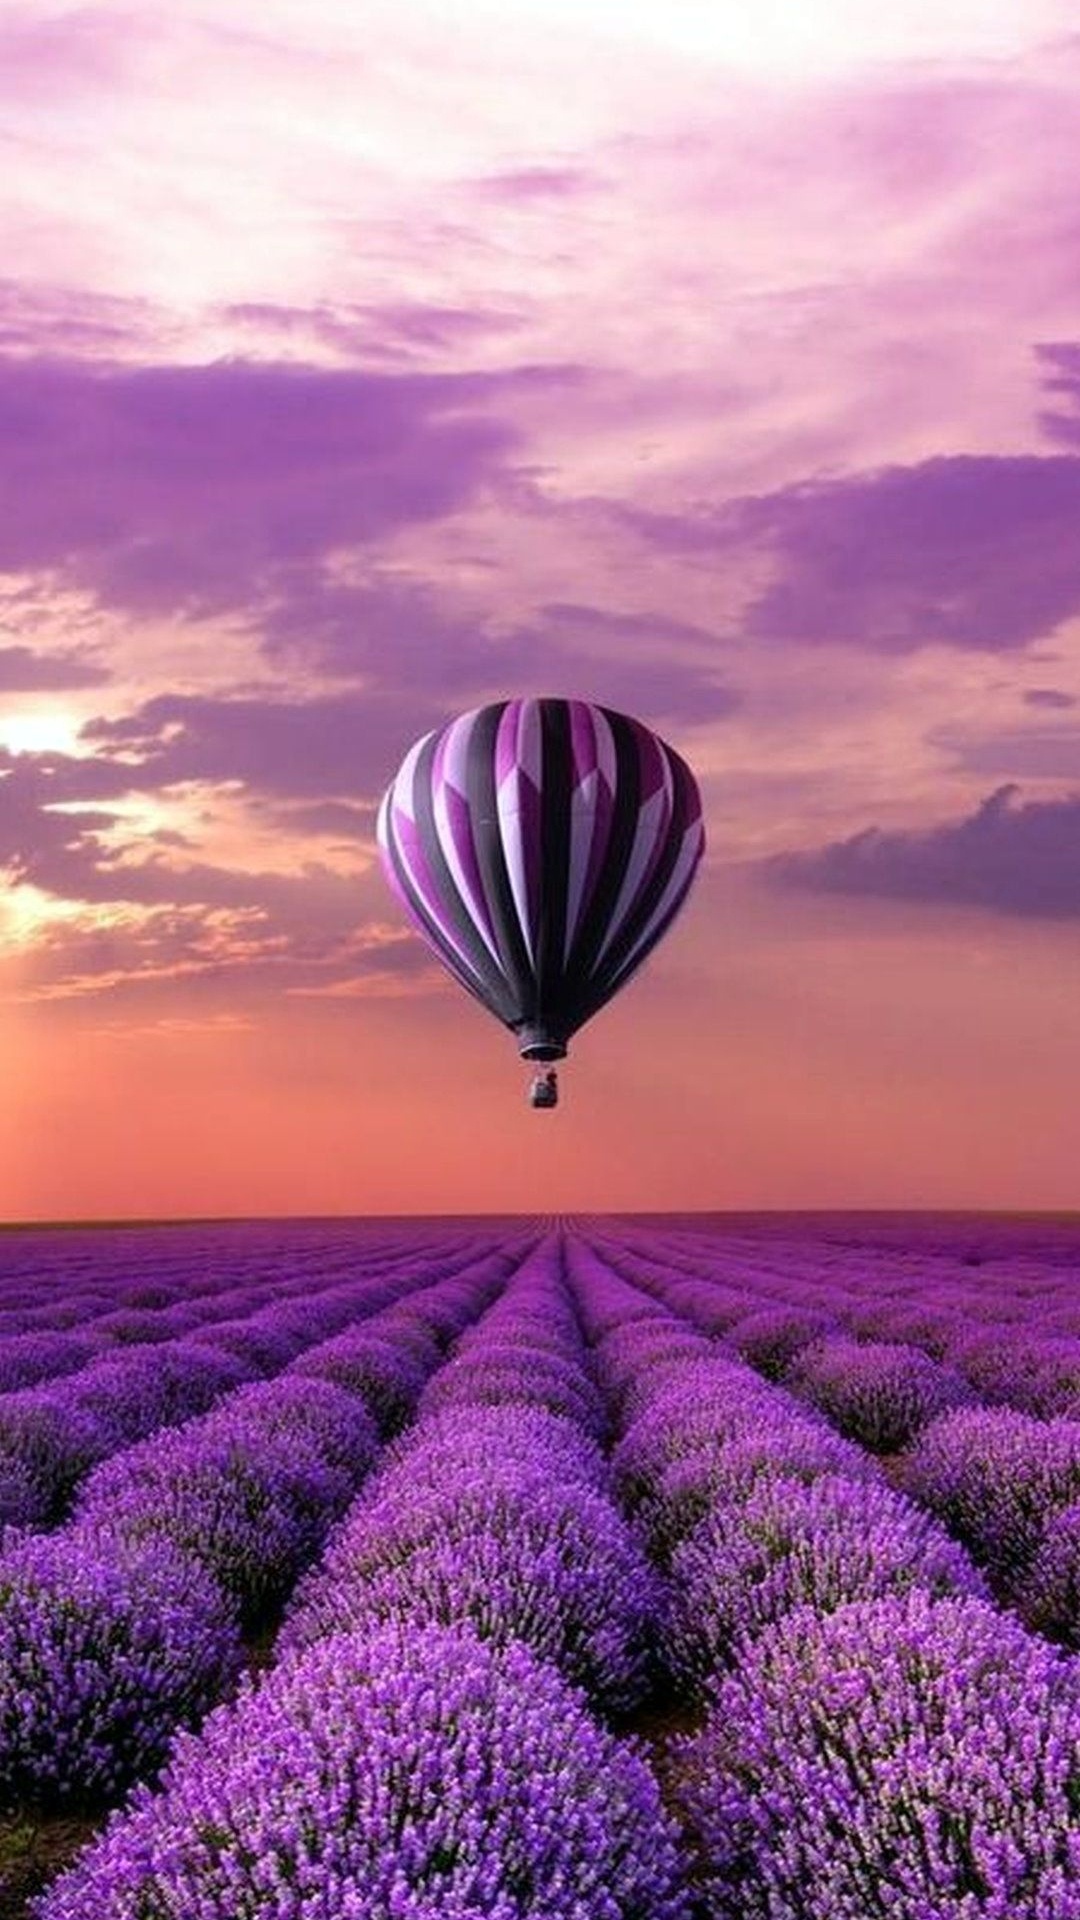 Purple Flower Field Under Cloudy Sky During Daytime. Wallpaper in 1080x1920 Resolution